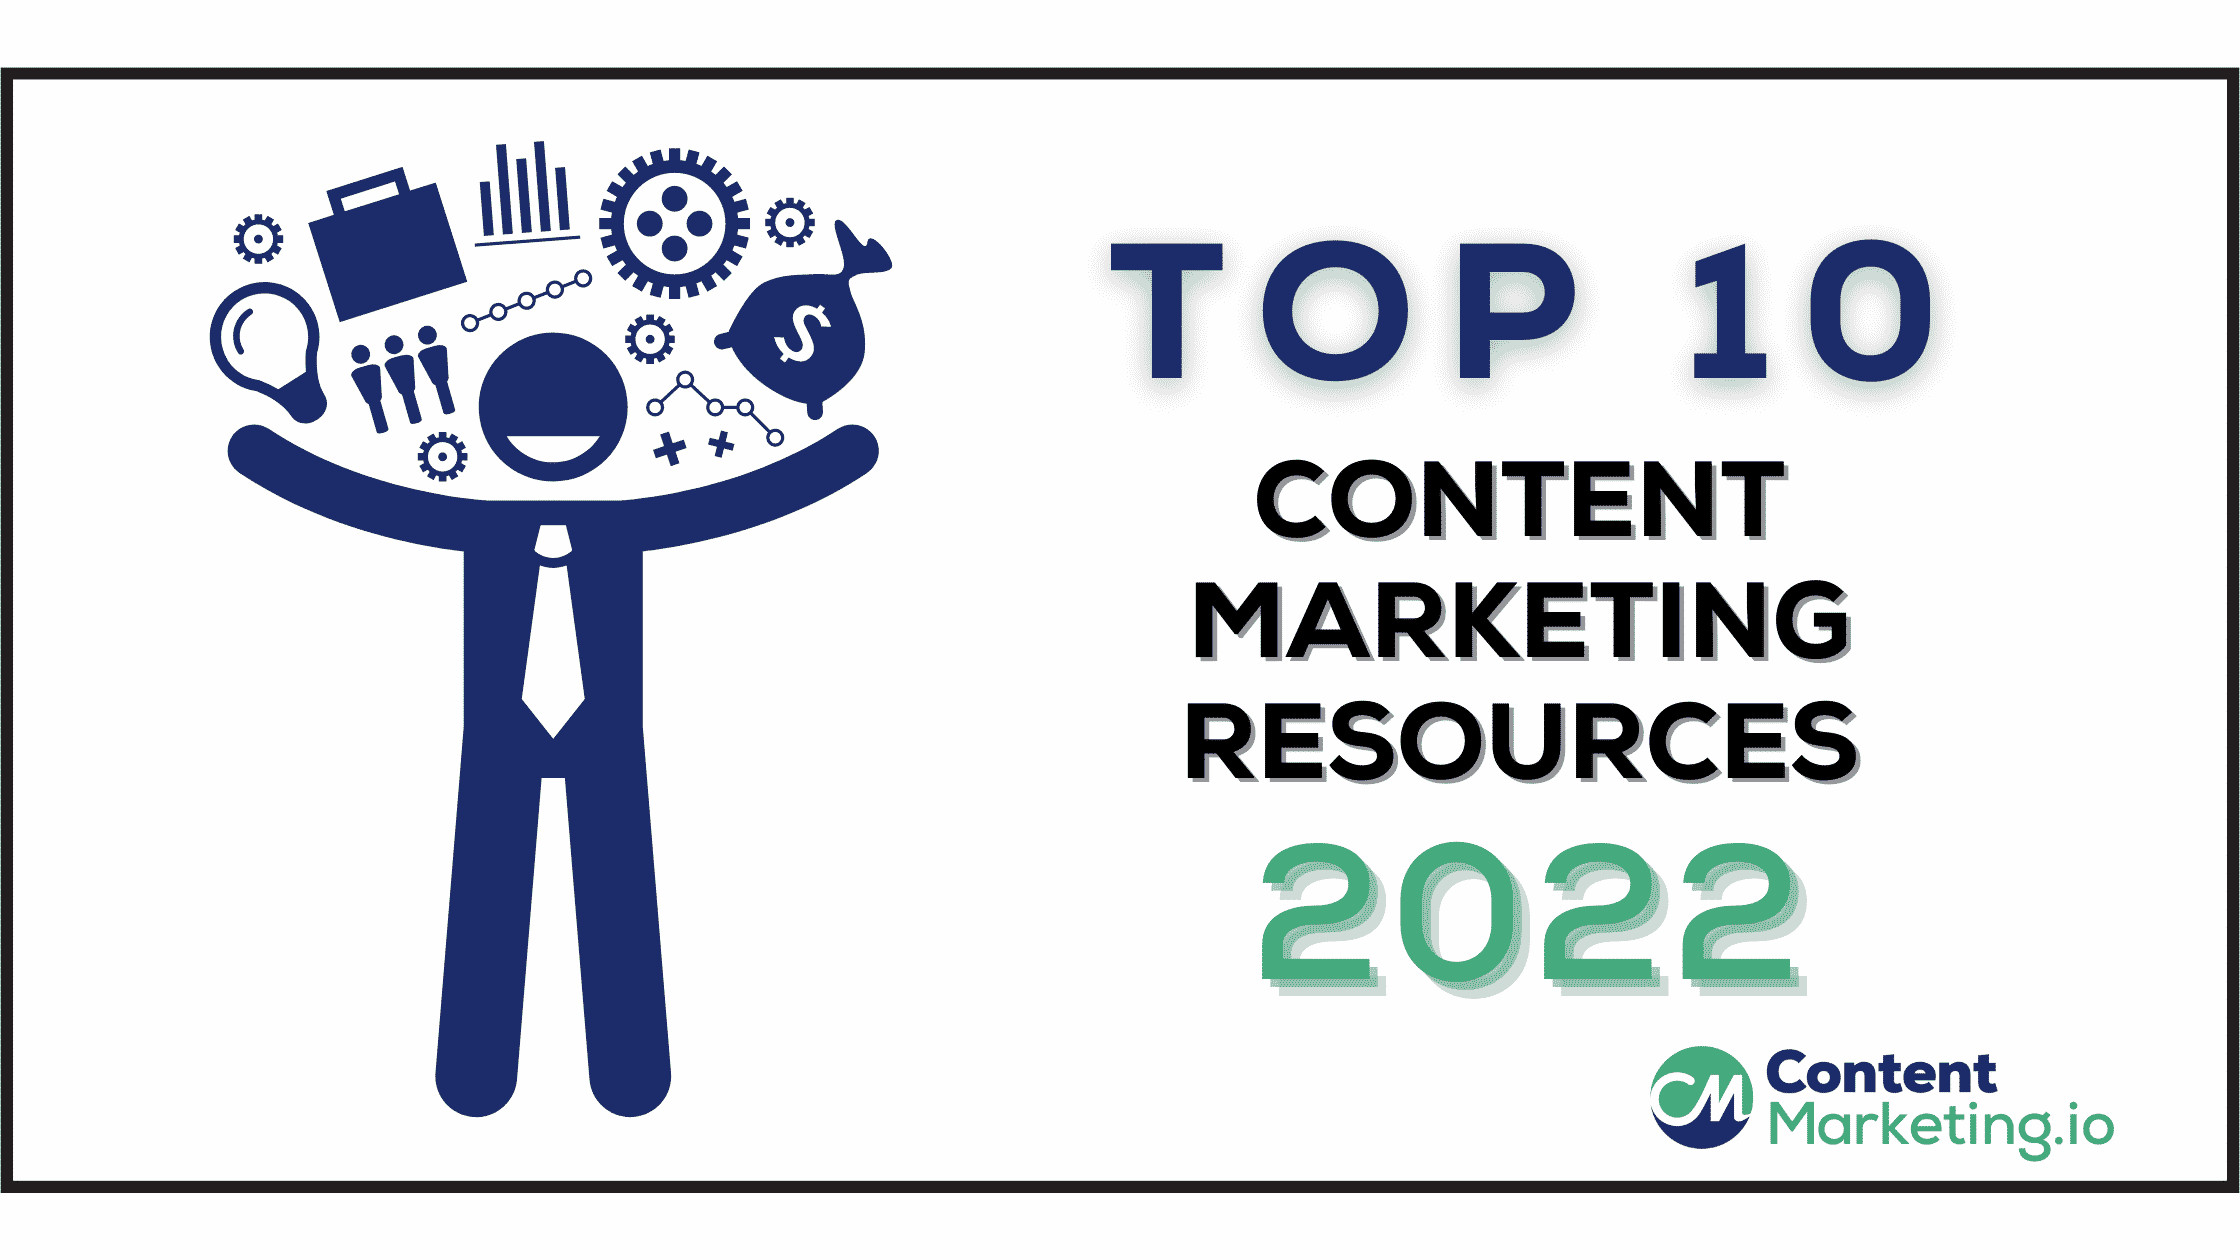 Content Marketing Resources